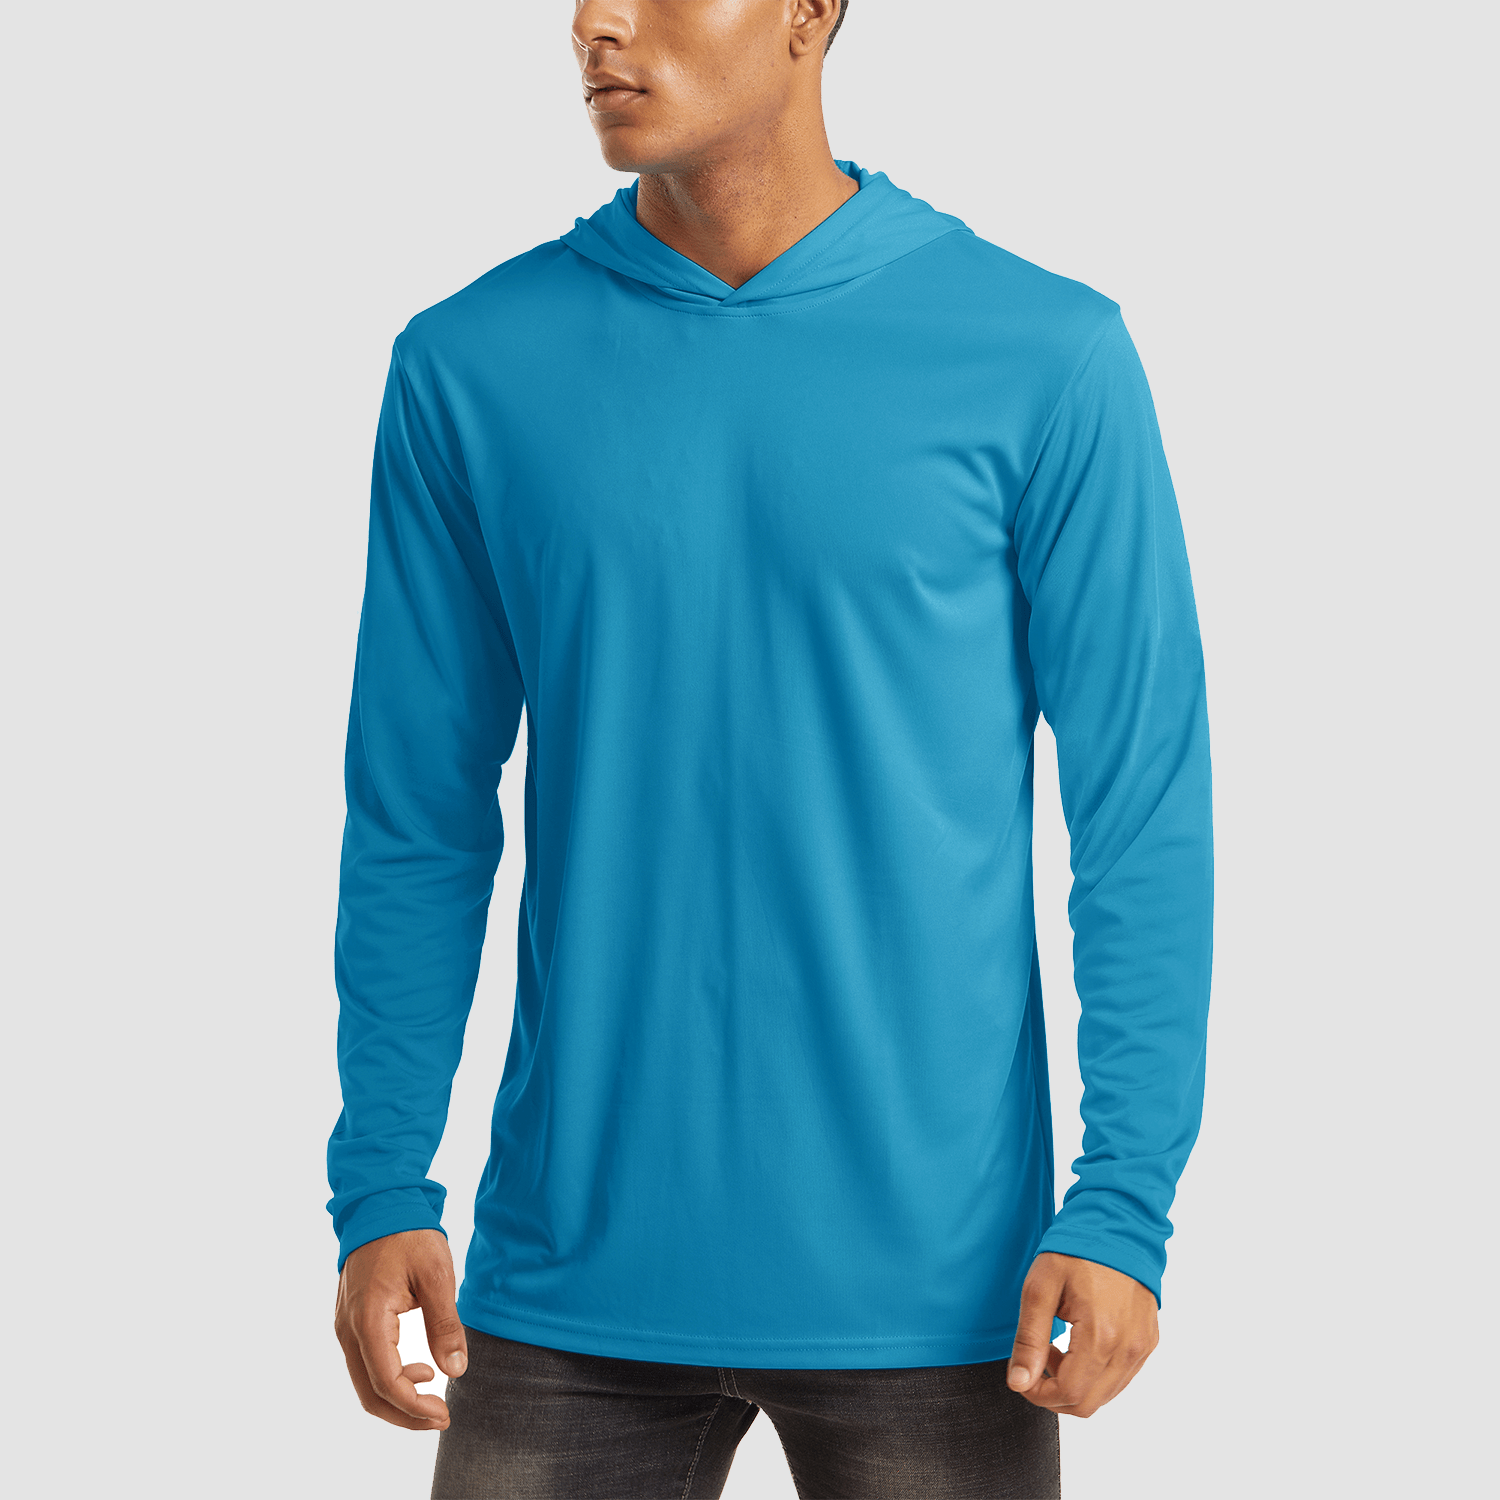 PAKUSISUP Mens Fishing PFG Shirts UPF Long Sleeve Fishing Shirts for Hiking Running Cycling, Men's, Size: Small, Blue